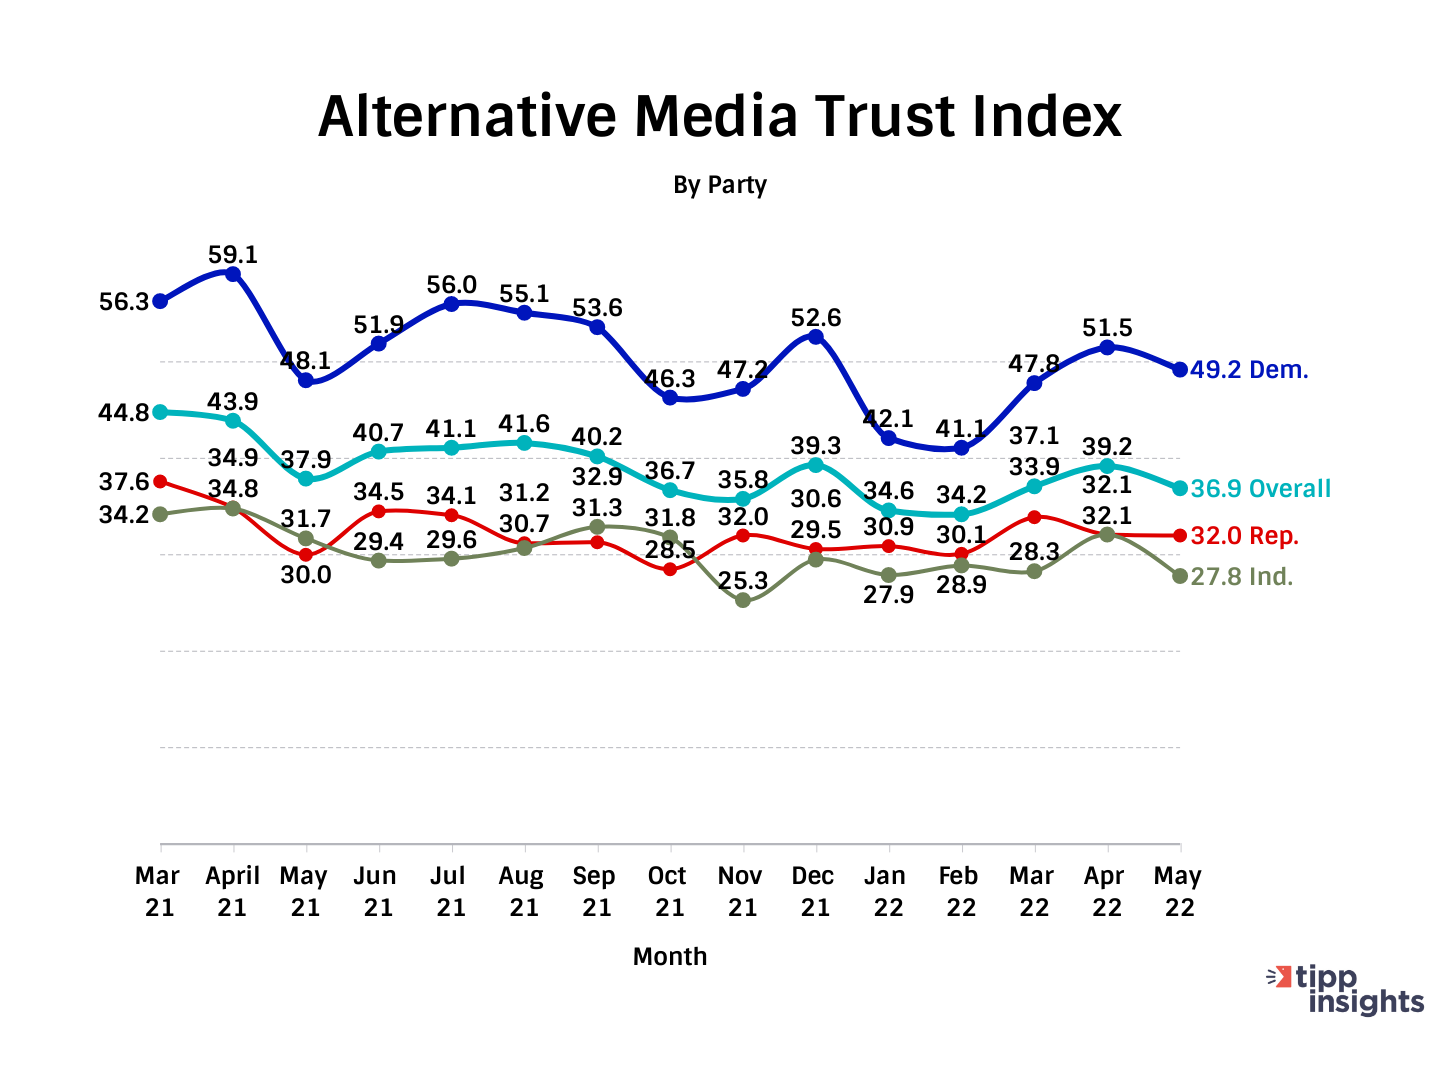 Trust in alternative media index MArch 2021 - May 2022